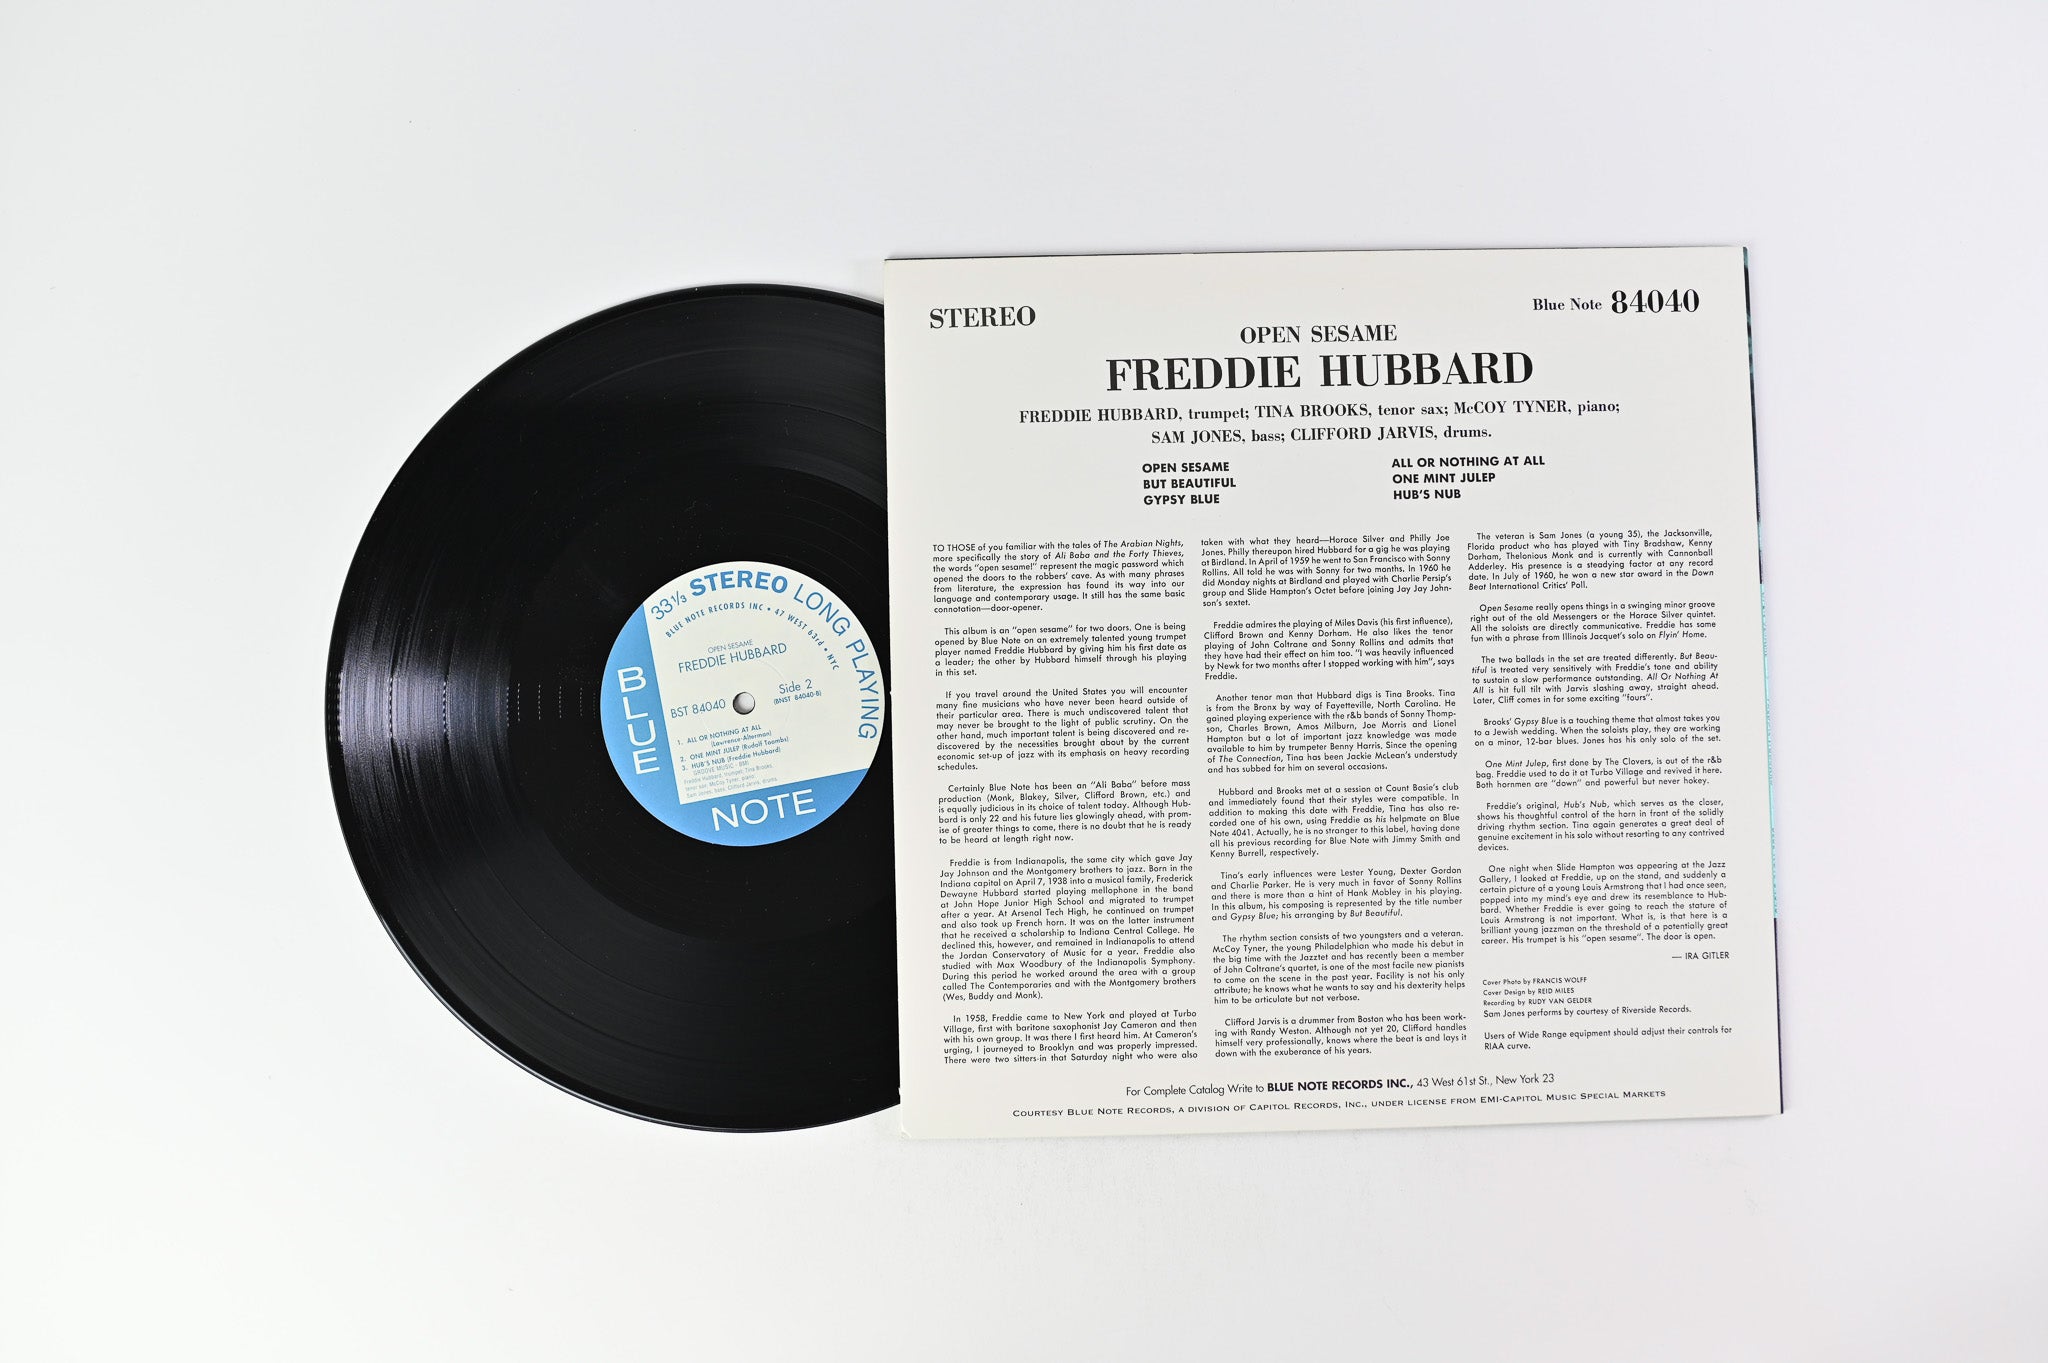 Freddie Hubbard - Open Sesame on Blue Note Classic Records 180 Gram Reissue